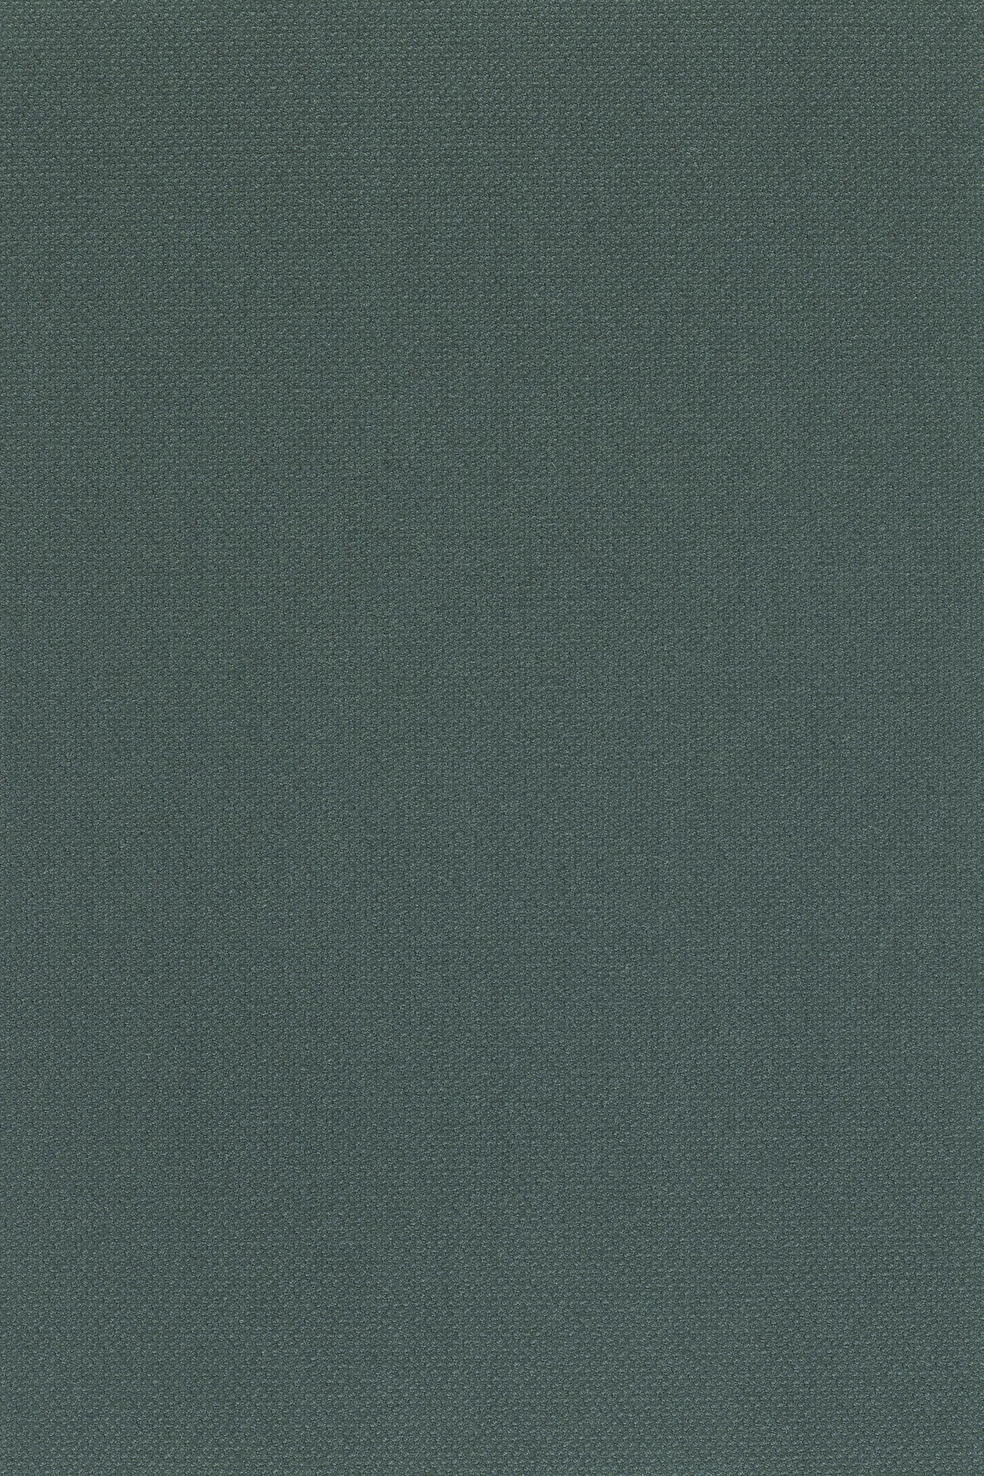 Fabric sample Steelcut 2 180 green